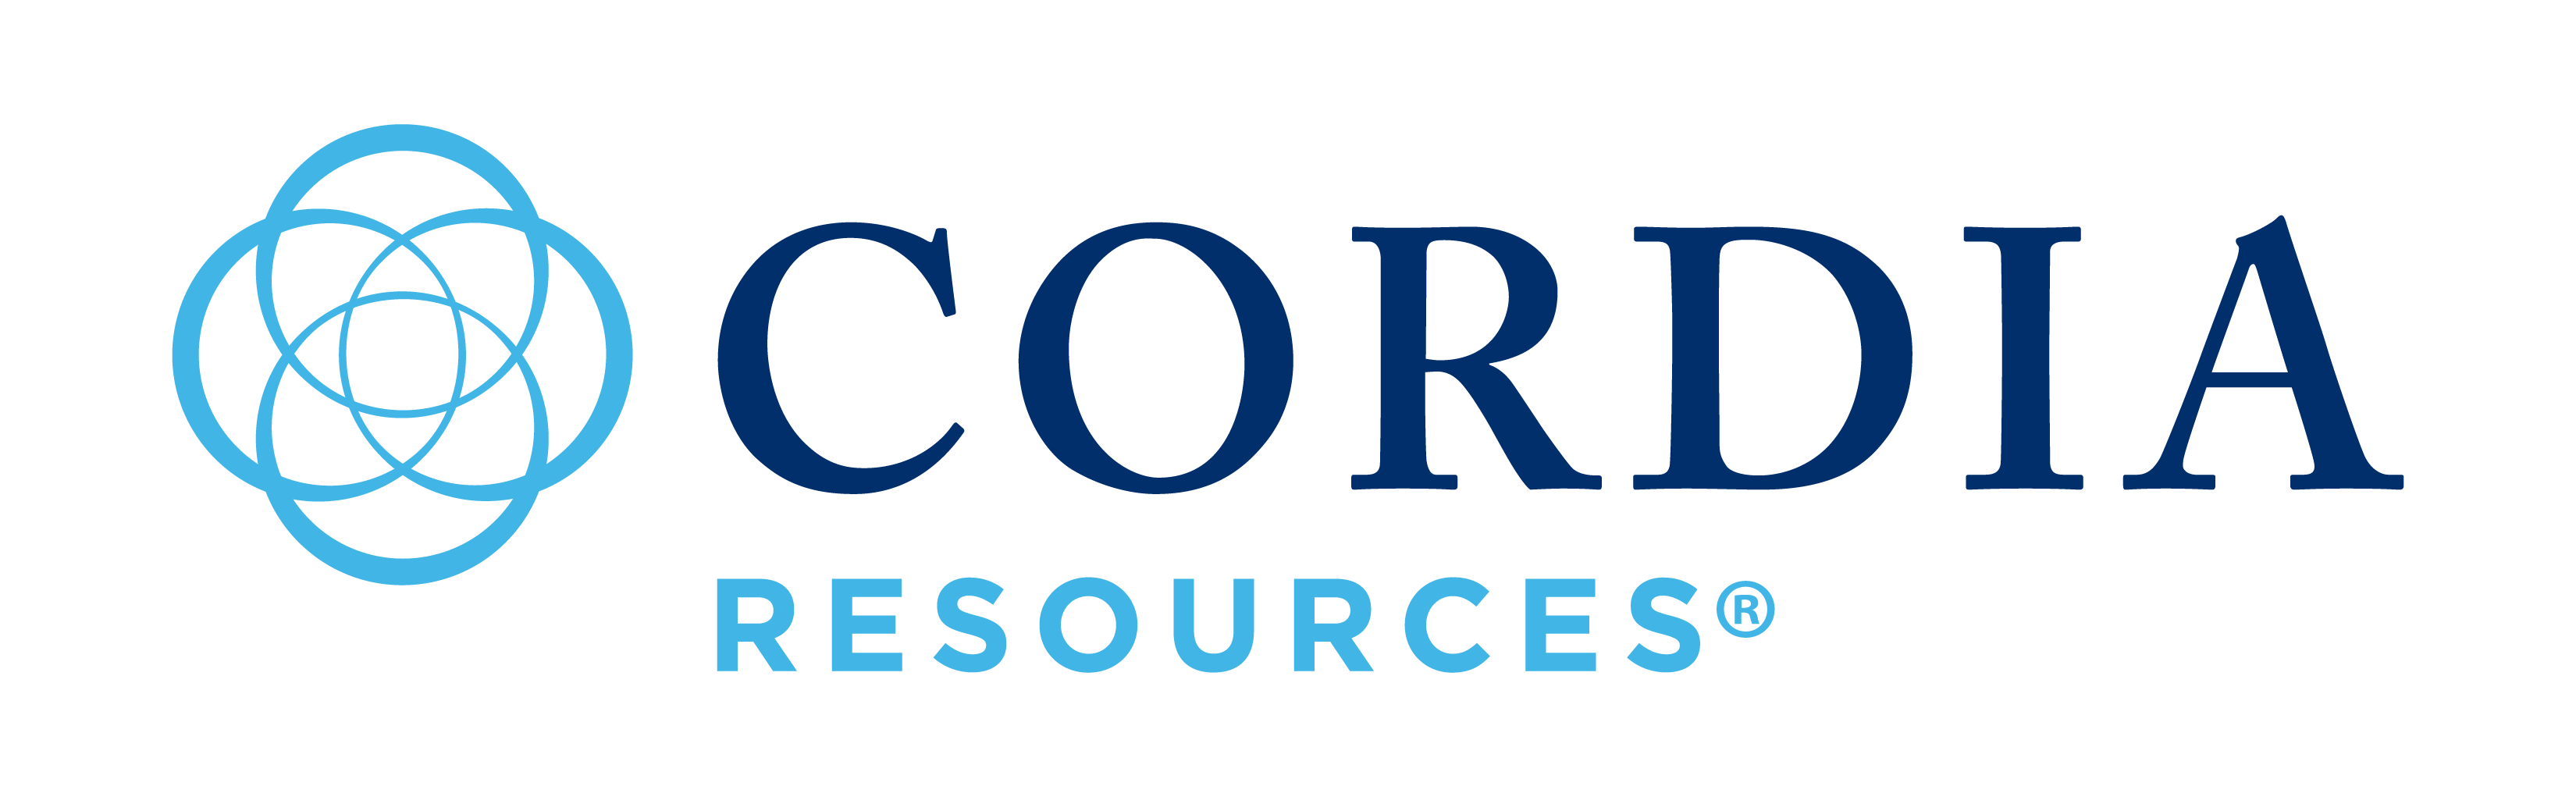 Cordia Resources logo-rbg